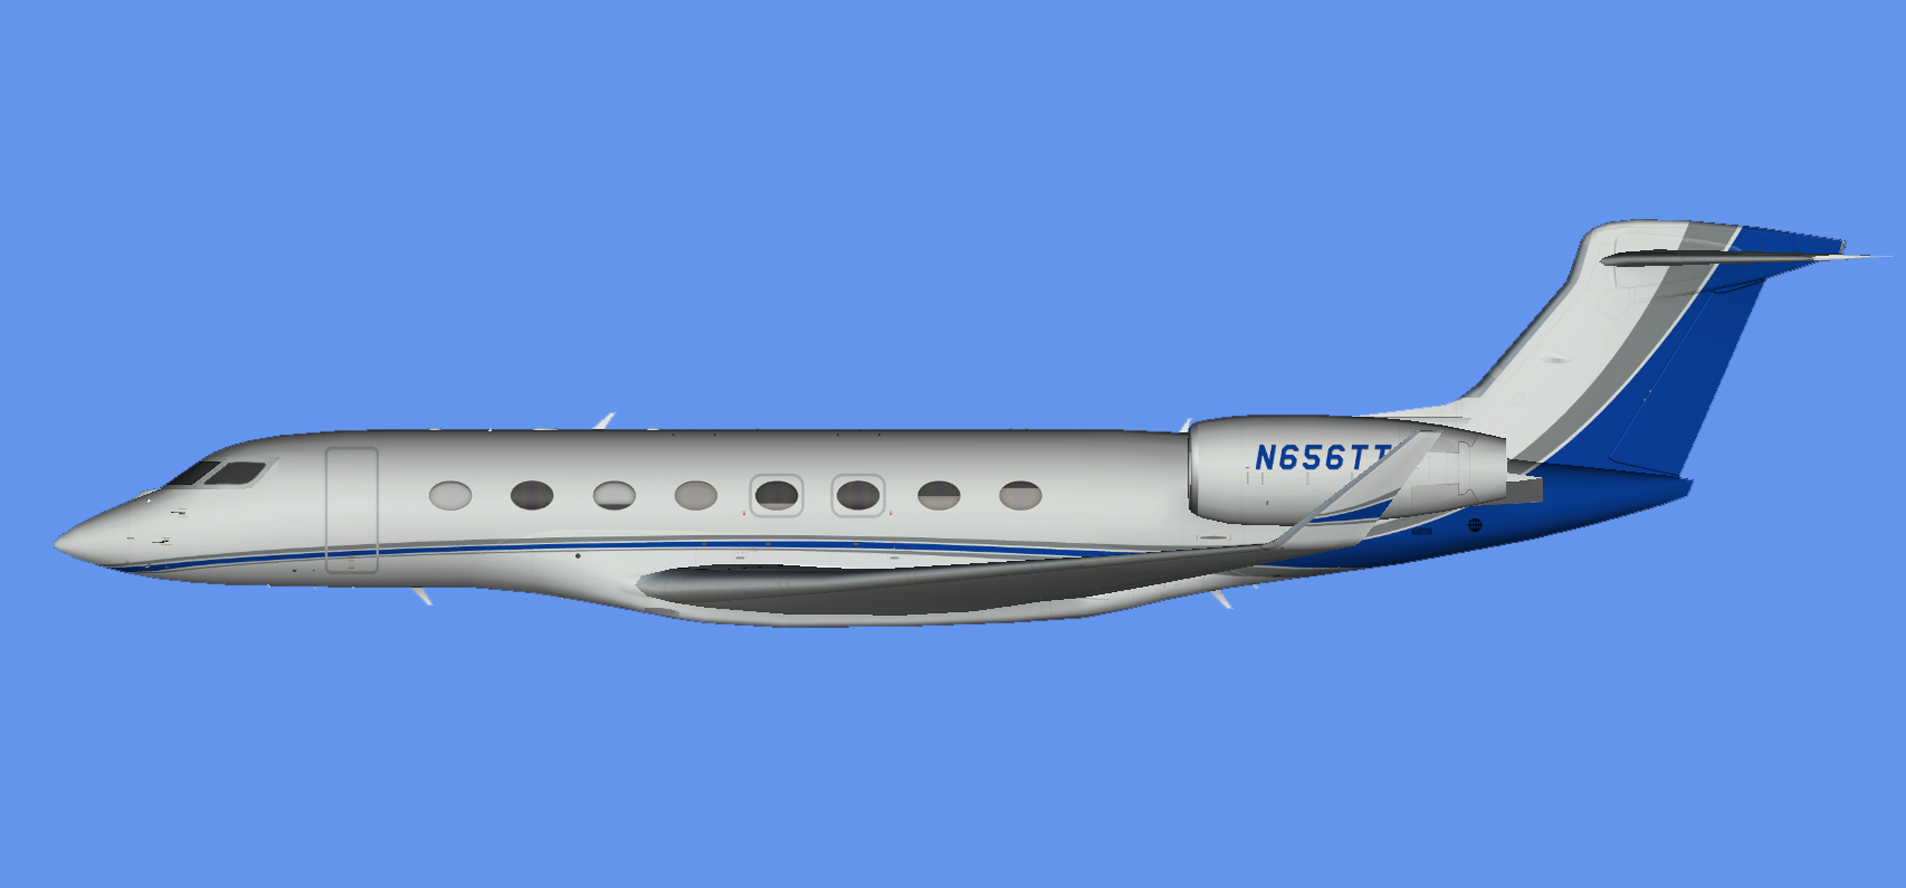 Gulfstream G650 N656TT